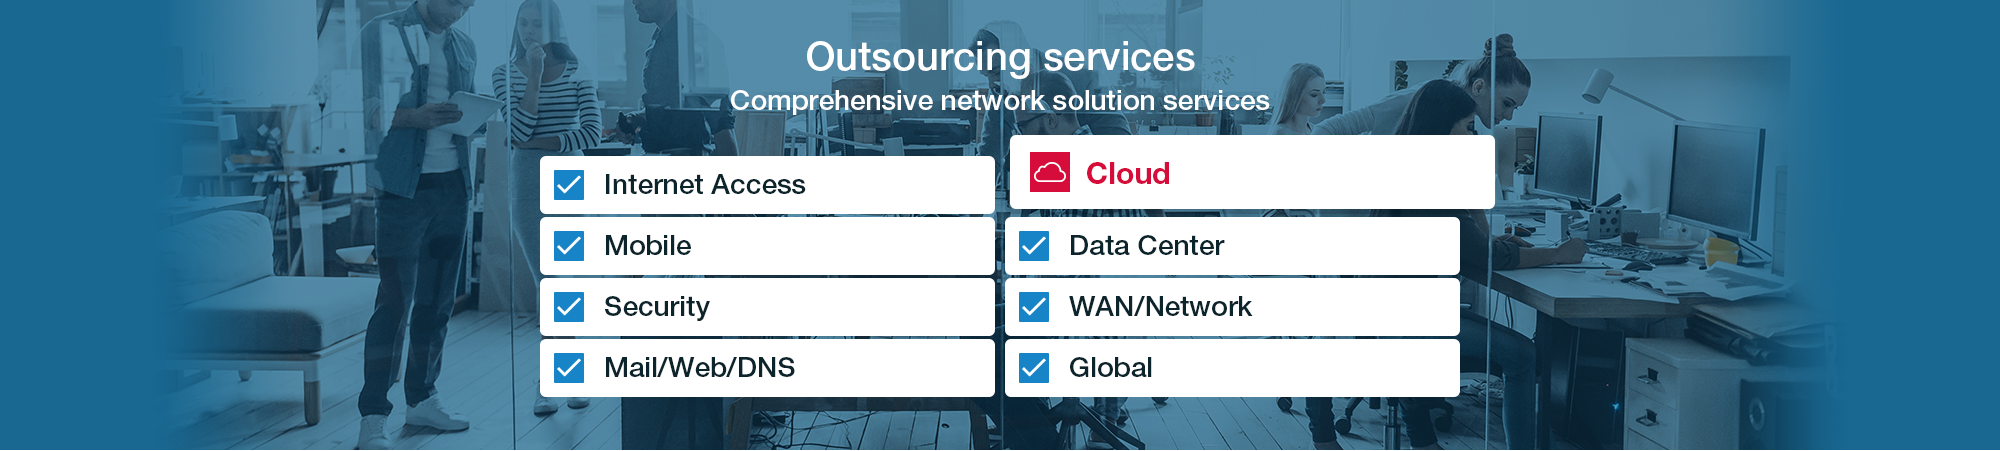 Comprehensive network solution services